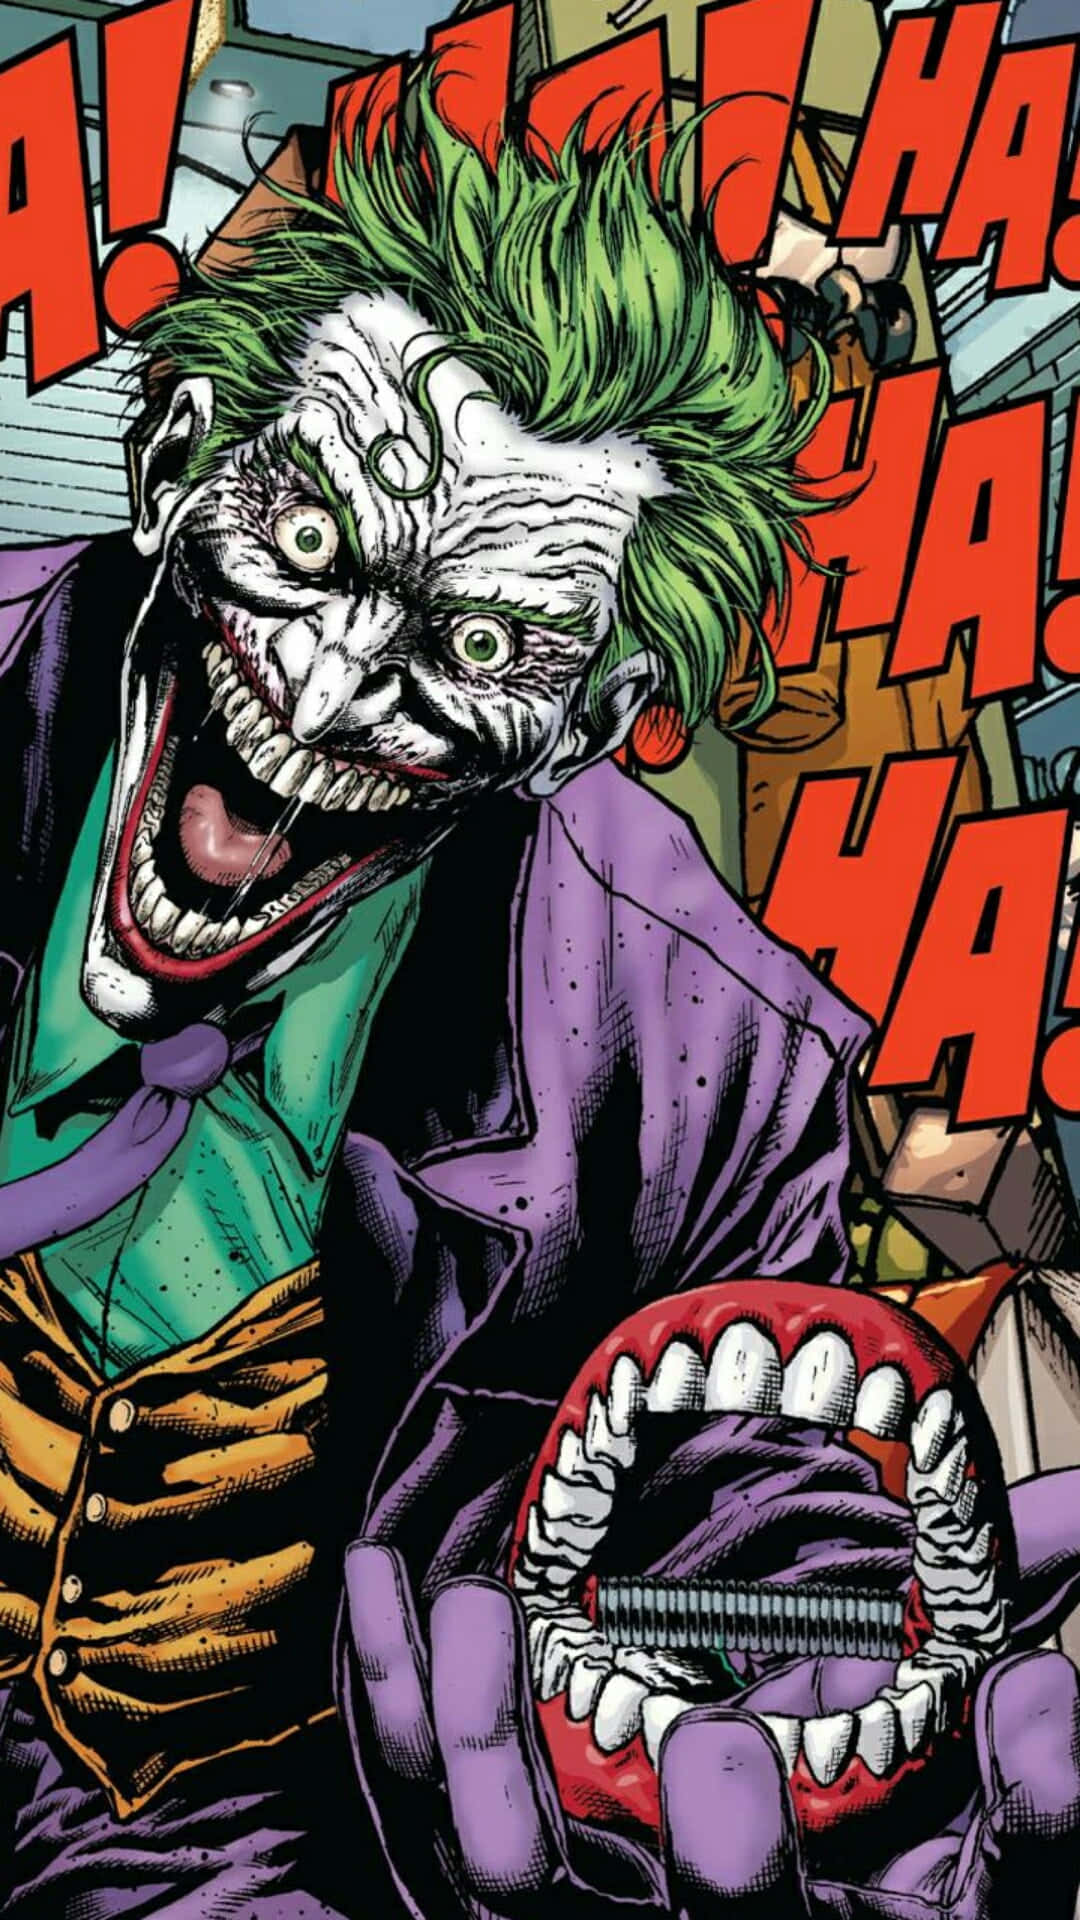 Joker Laughing Maniacally In The Dark